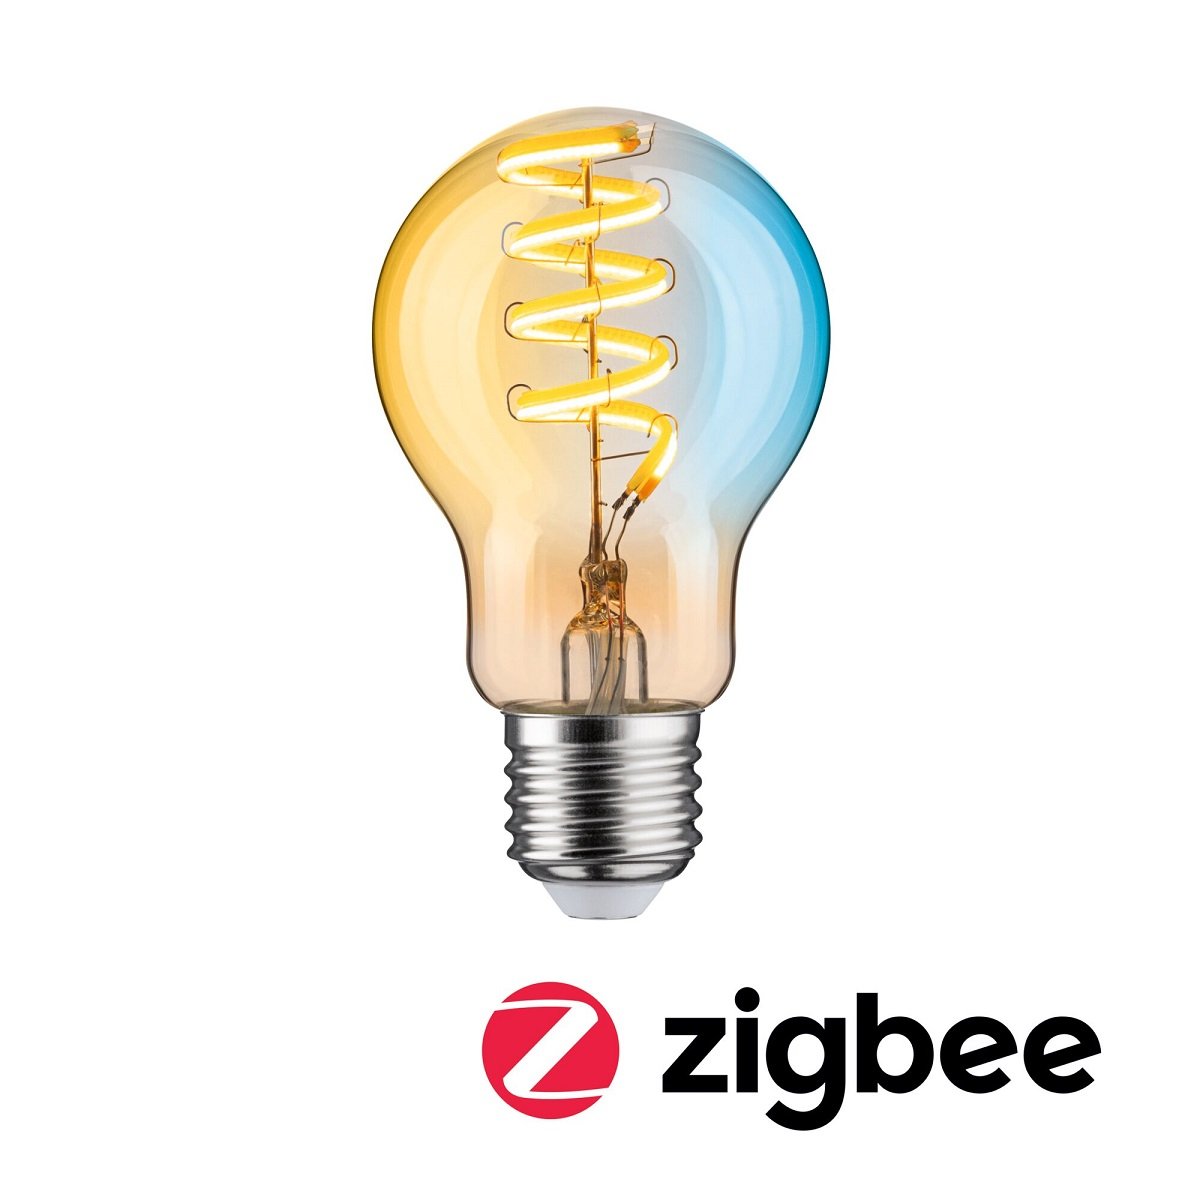 https://www.lightkontor.de/pic/Paulmann-29155-Filament-230V-Smart-Home-Zigbee-LED-Birne-E27-600lm-Tunable-White.29155a.jpg